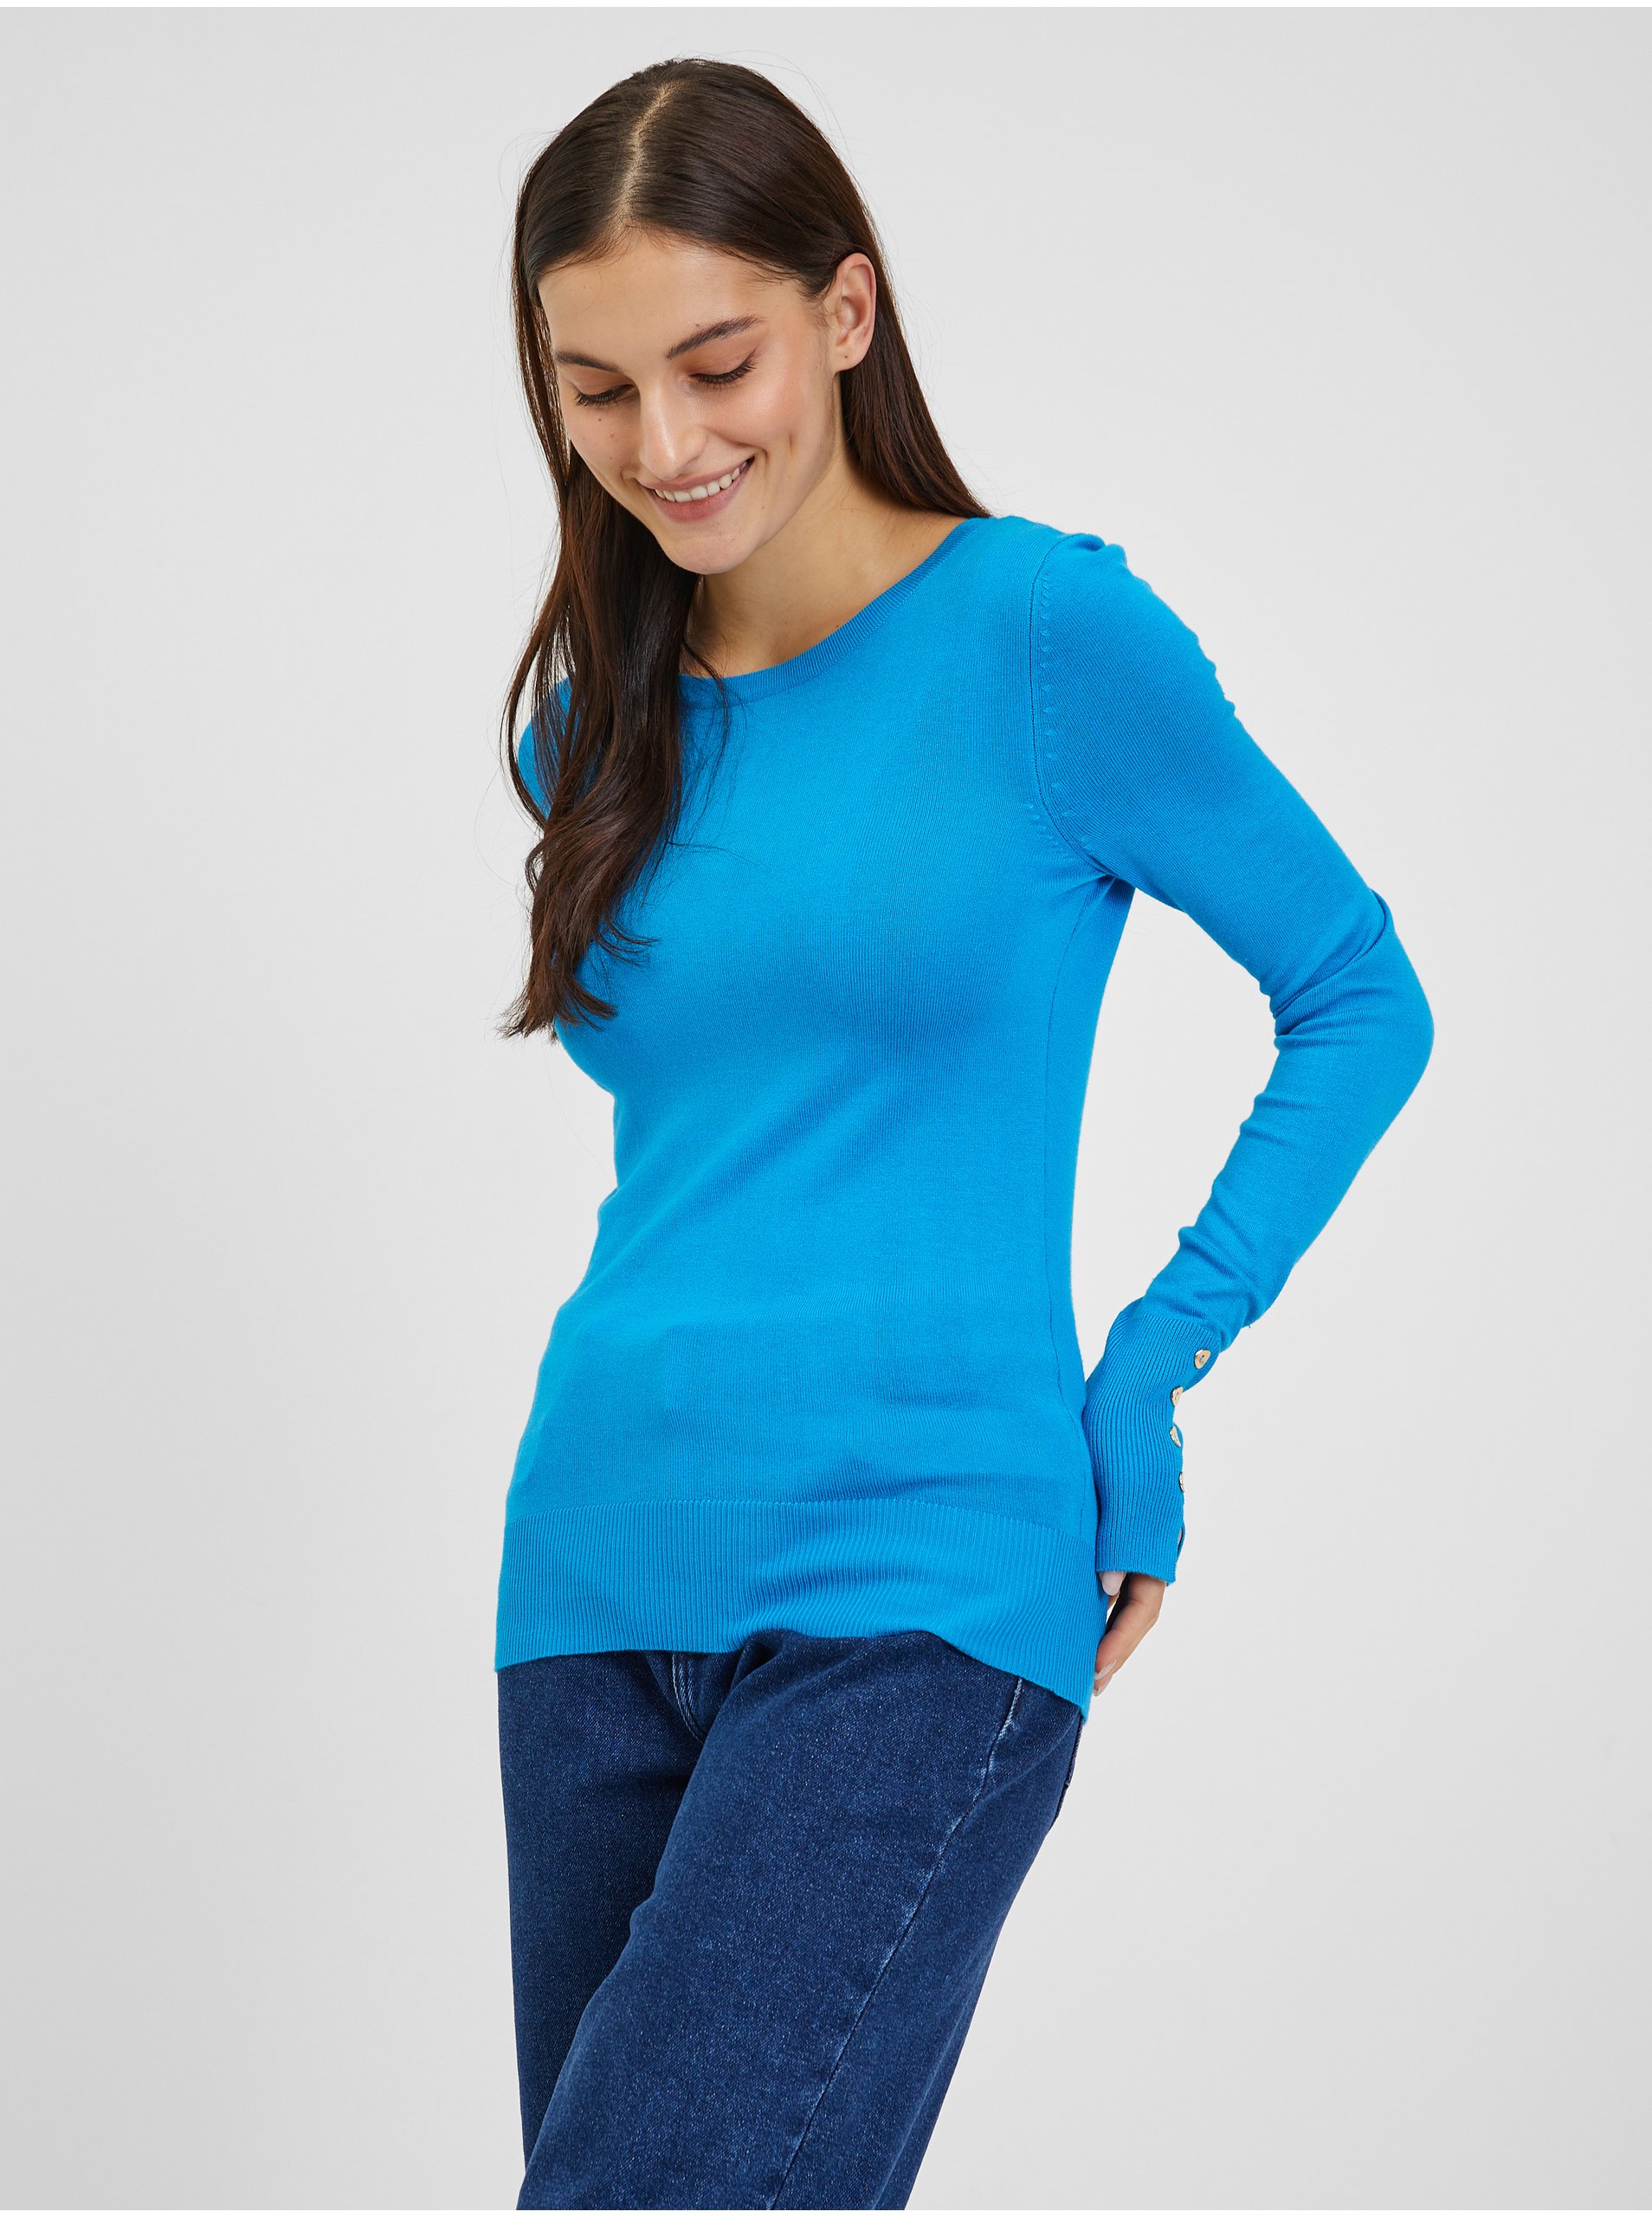 E-shop Modrý dámský lehký svetr ORSAY